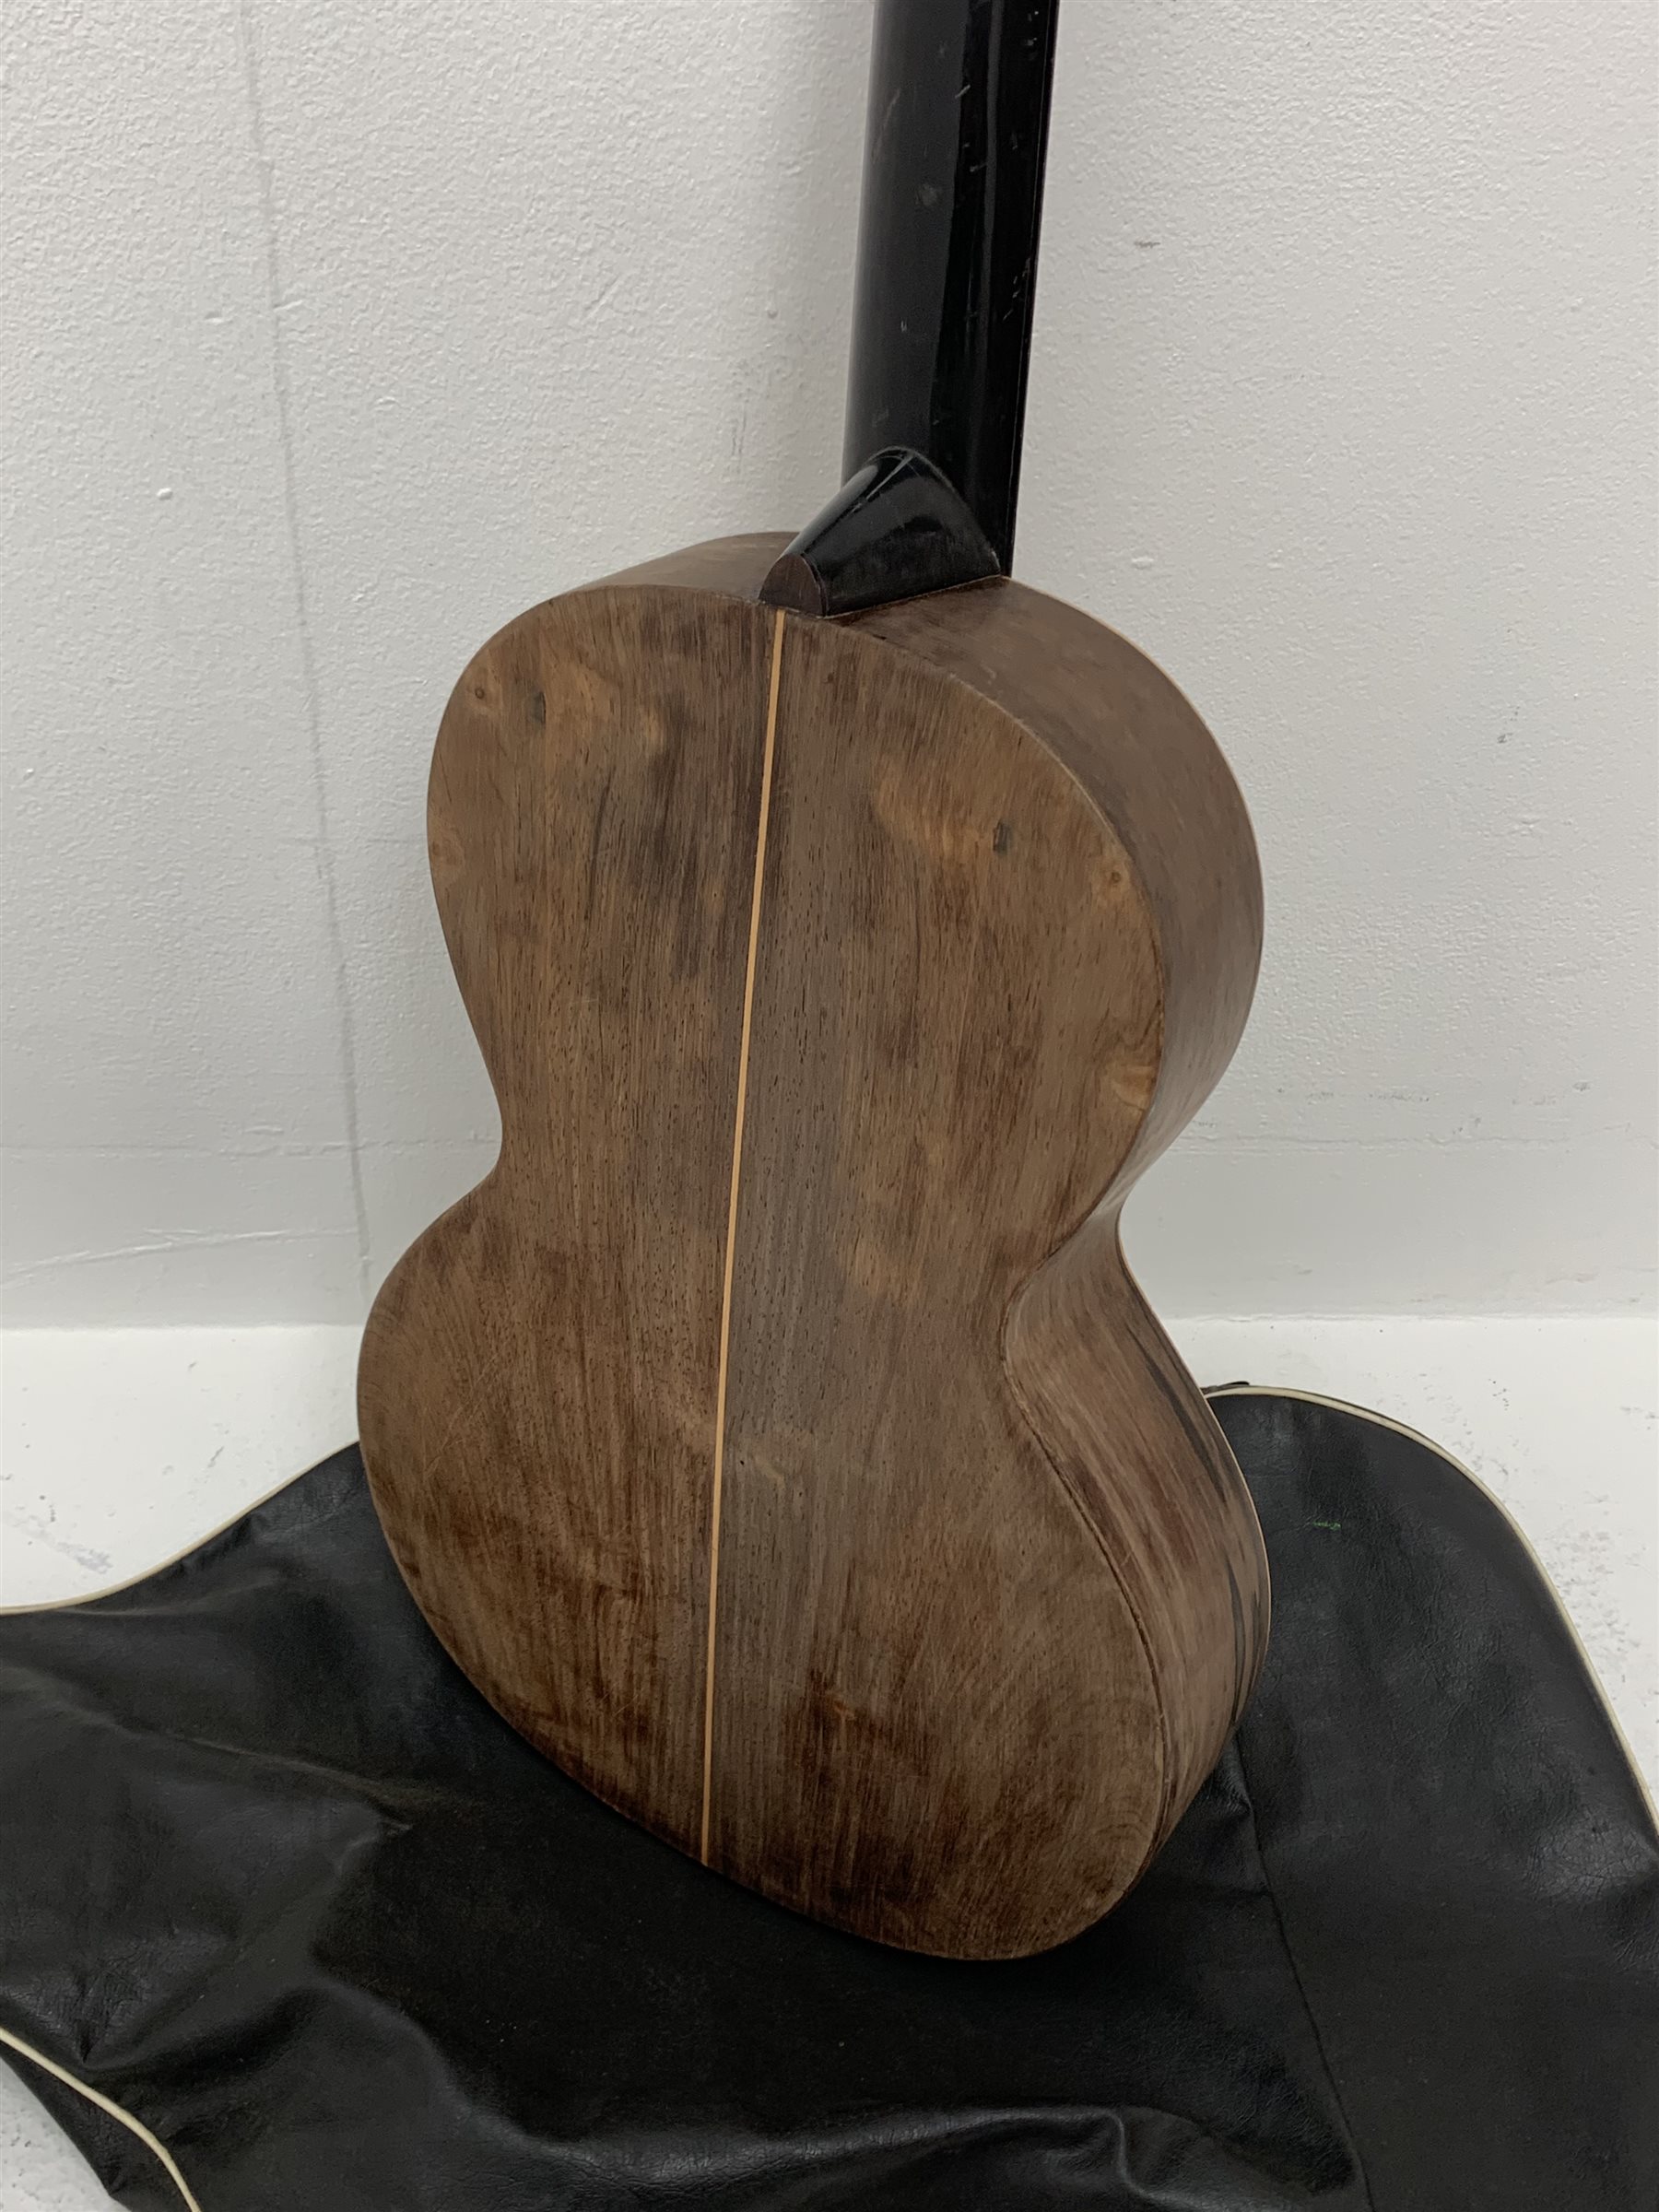 Early 20th century Brazilian Rosewood guitar, labelled Hijos de Ramon Redueyo, Valencia, in carryin - Image 6 of 6